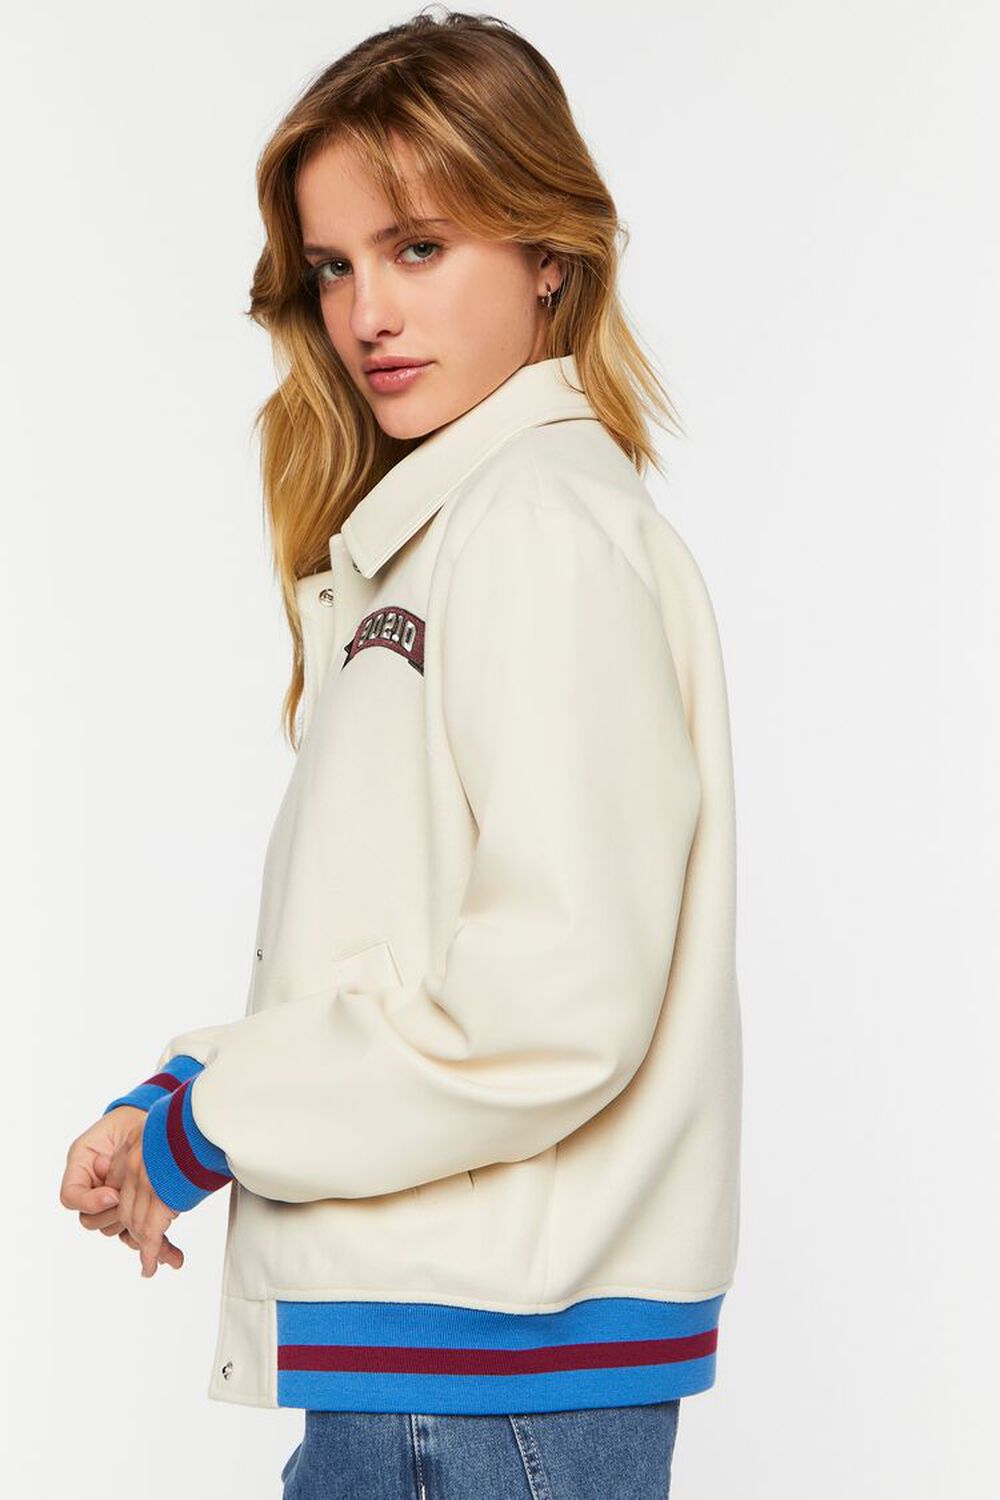 IVORY Faux Leather Varsity-Striped Tennis Jacket, image 2